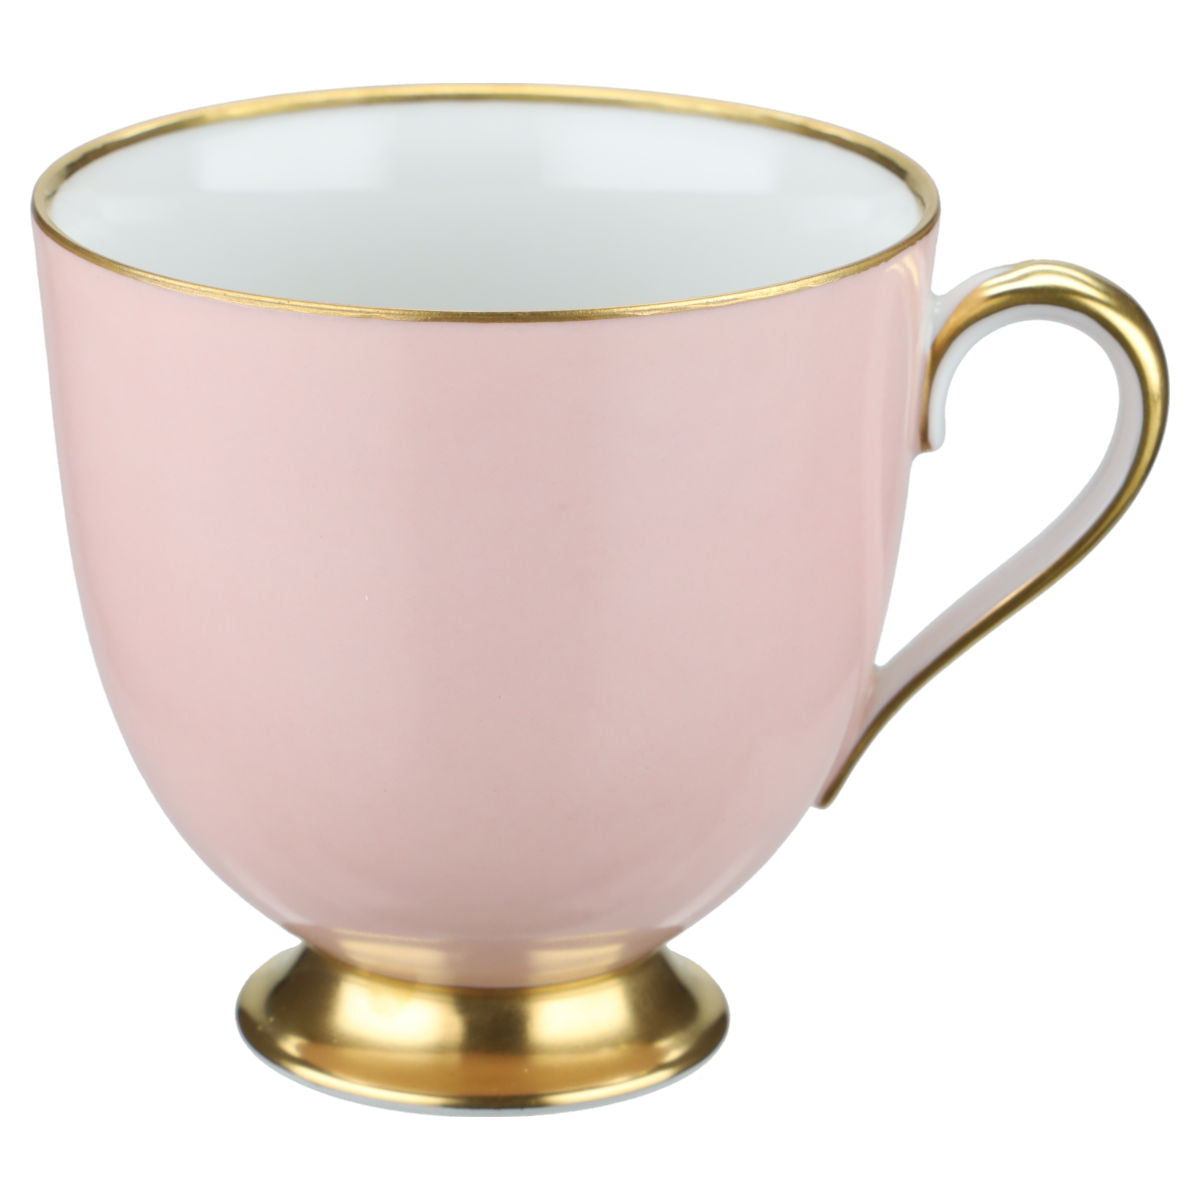 Kaffeetasse mit Untere - rosa